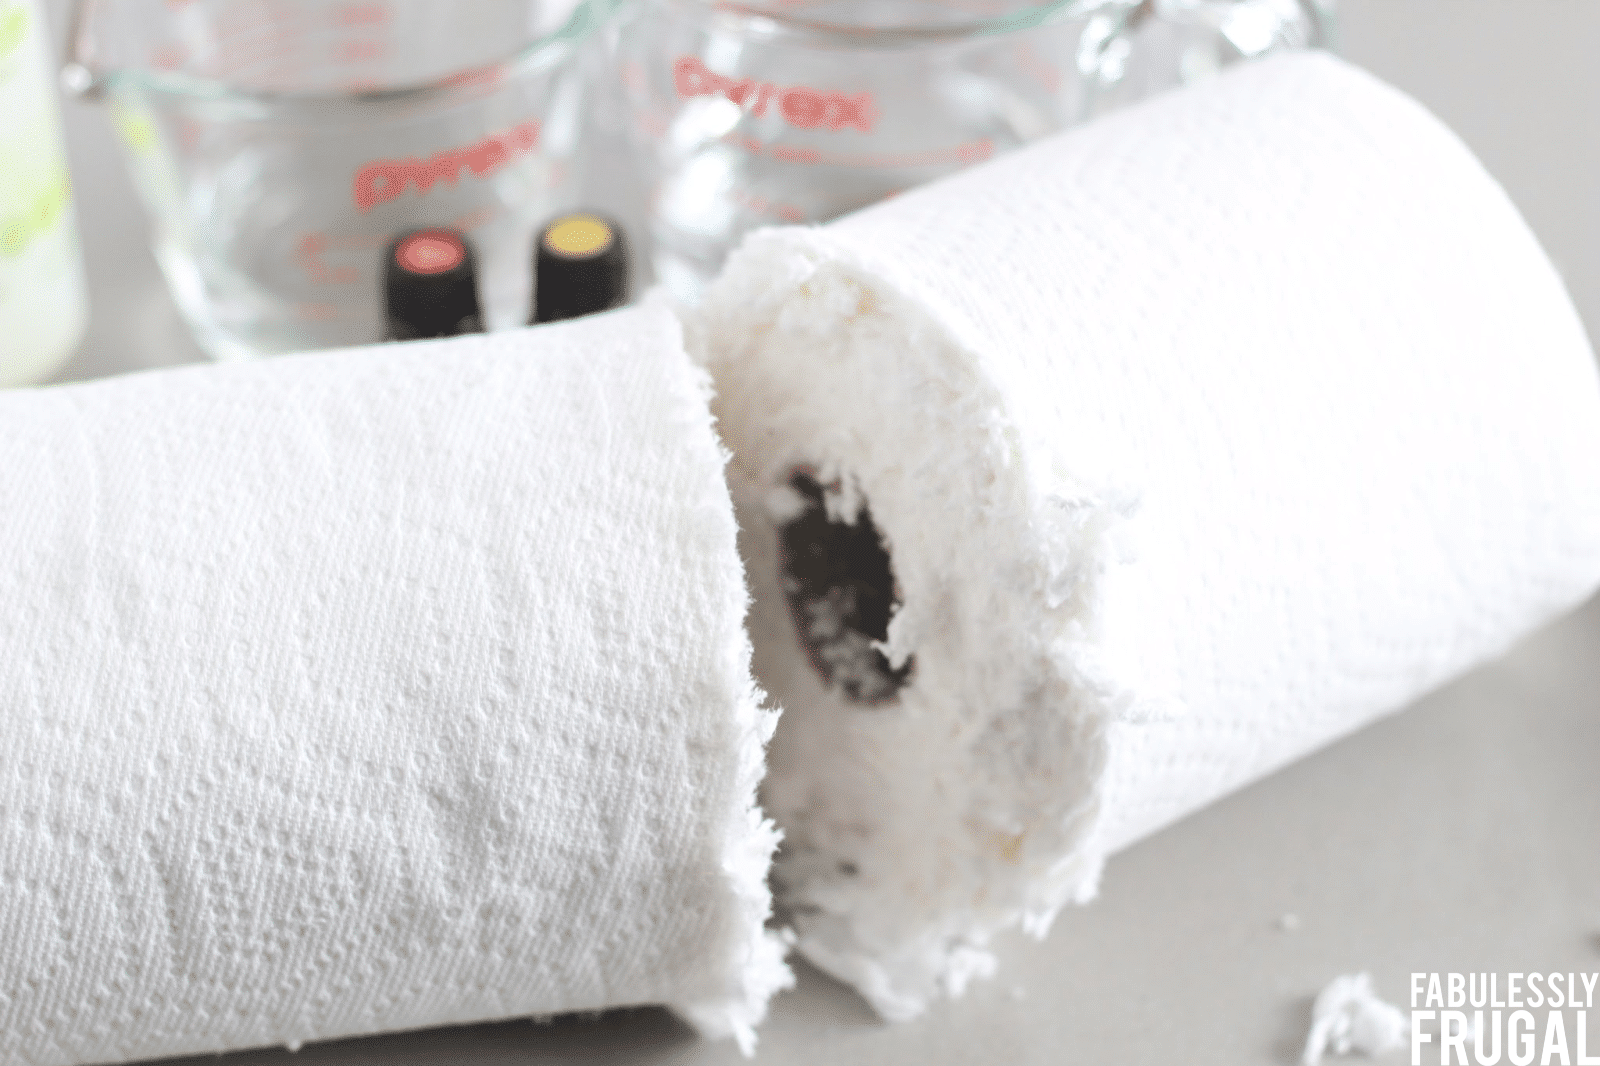 Paper towel roll cut in half